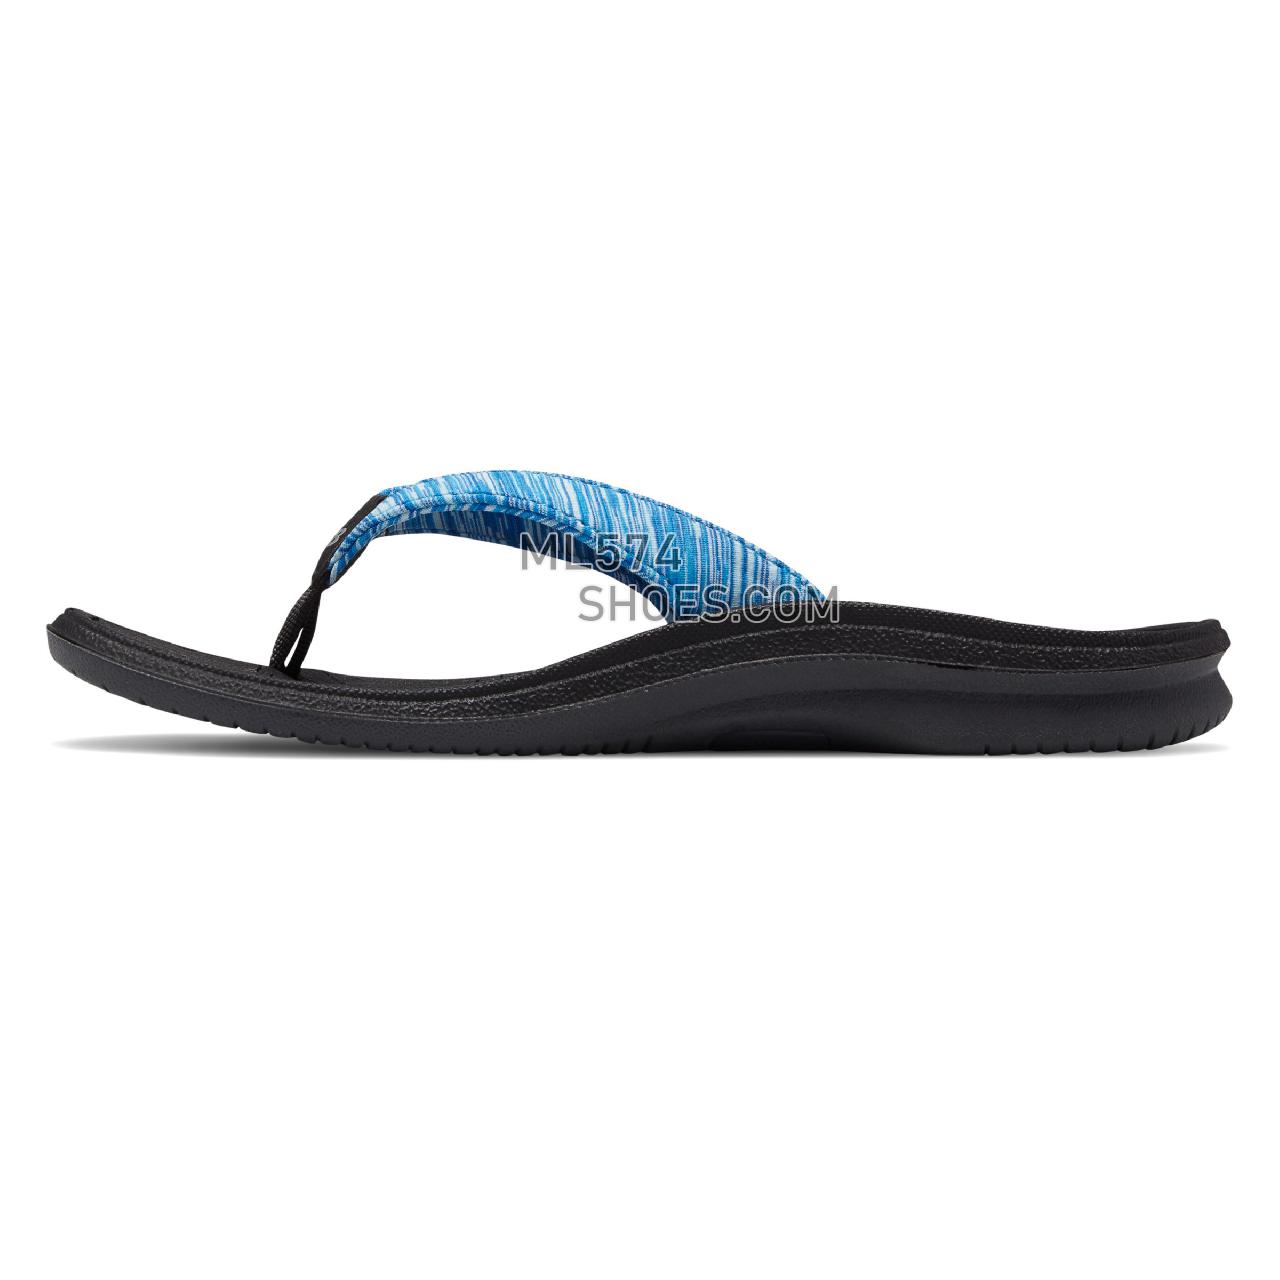 New Balance Cush+ Heathered Thong - Women's 6073 - Sandals Blue Atoll - W6073BKB